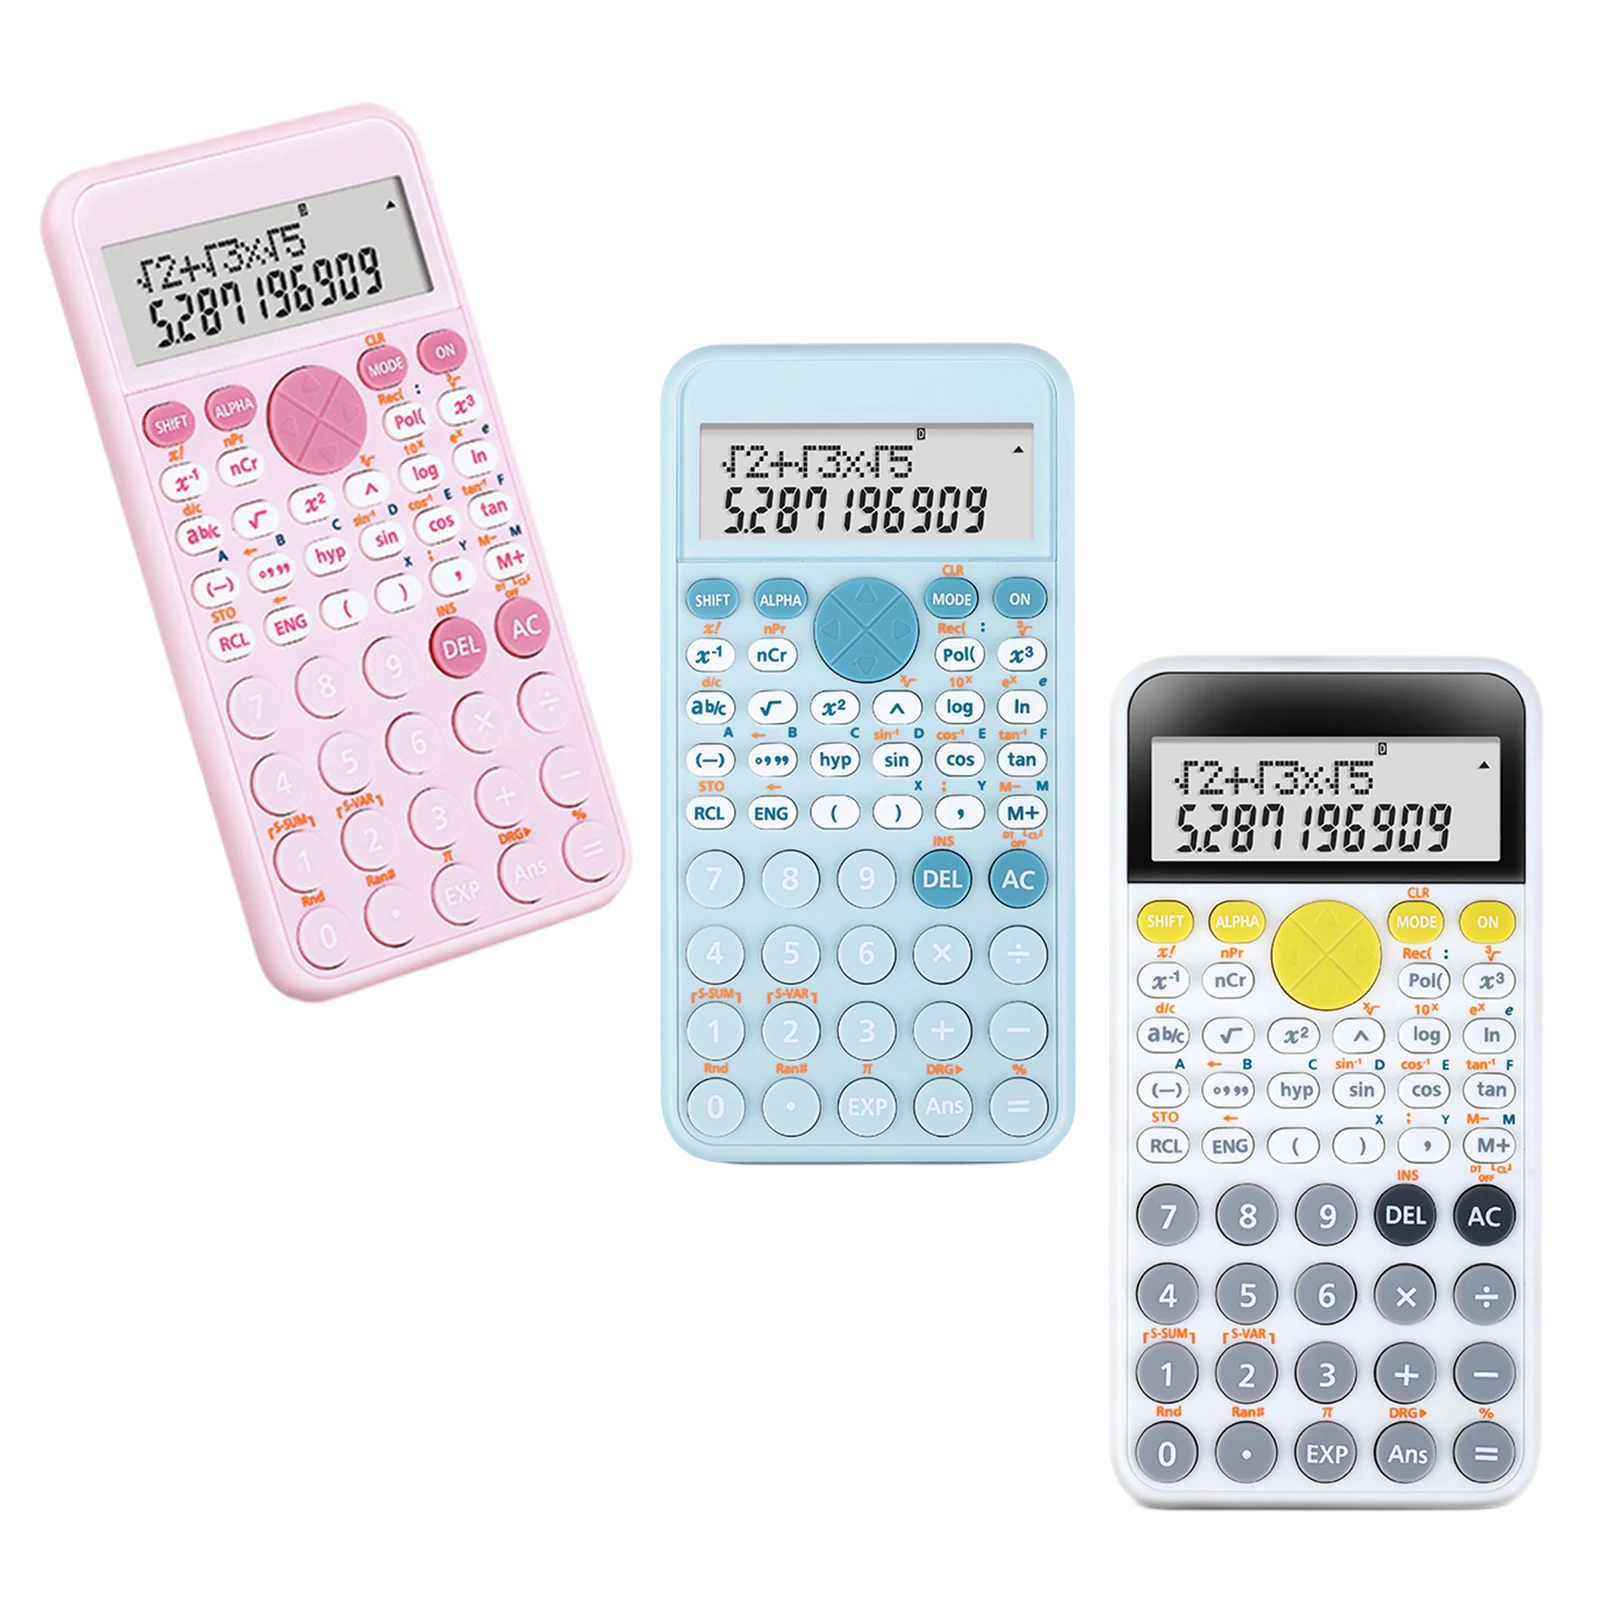 

Scientific Calculator 10 Digit Scientific Calculators Pink Blue White For Students In High School Or College Small Pocket